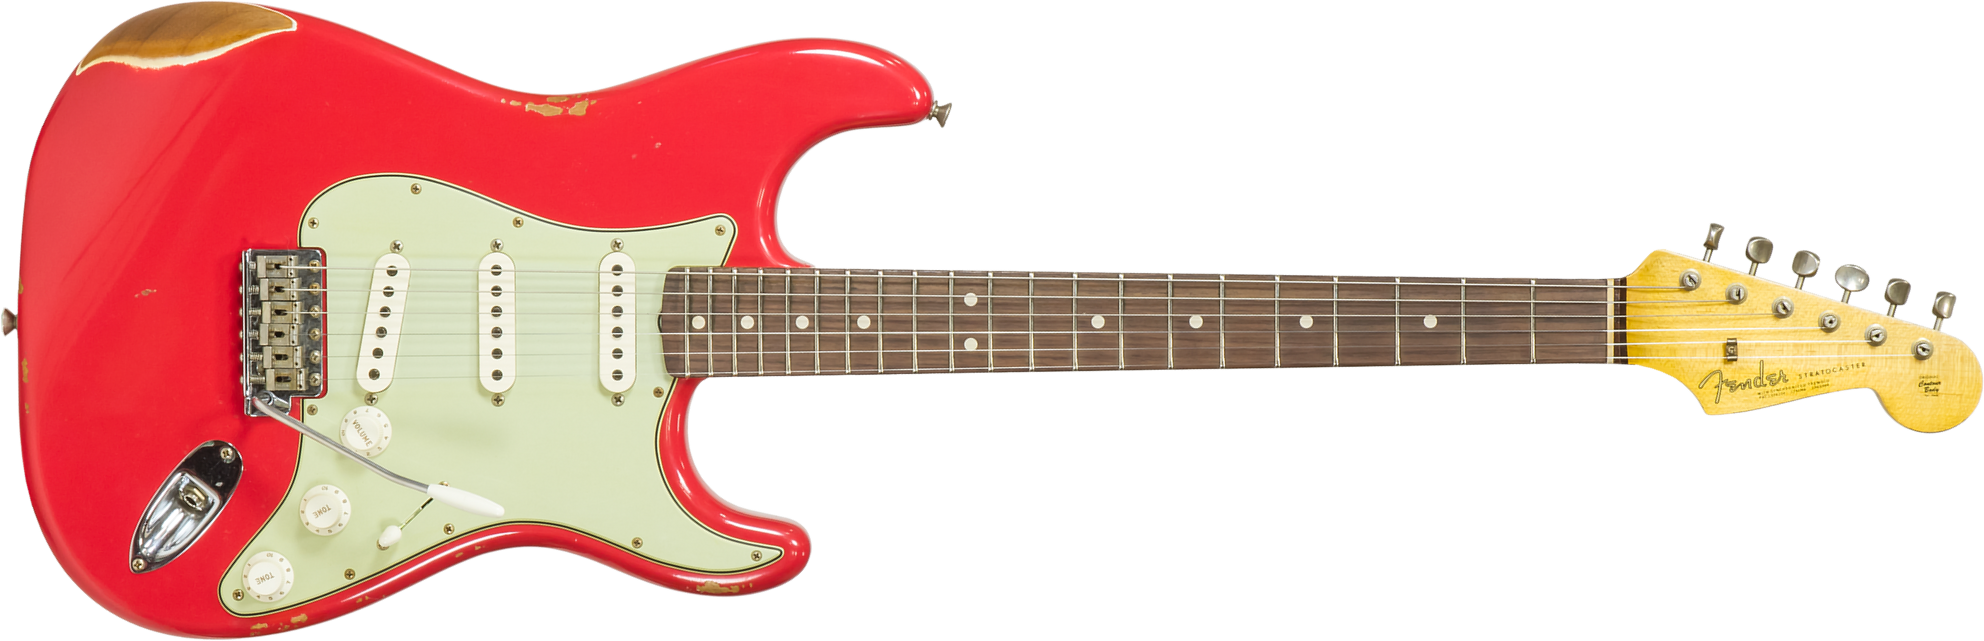 Fender Custom Shop Strat 1963 3s Trem Rw #r117571 - Relic Fiesta Red - E-Gitarre in Str-Form - Main picture